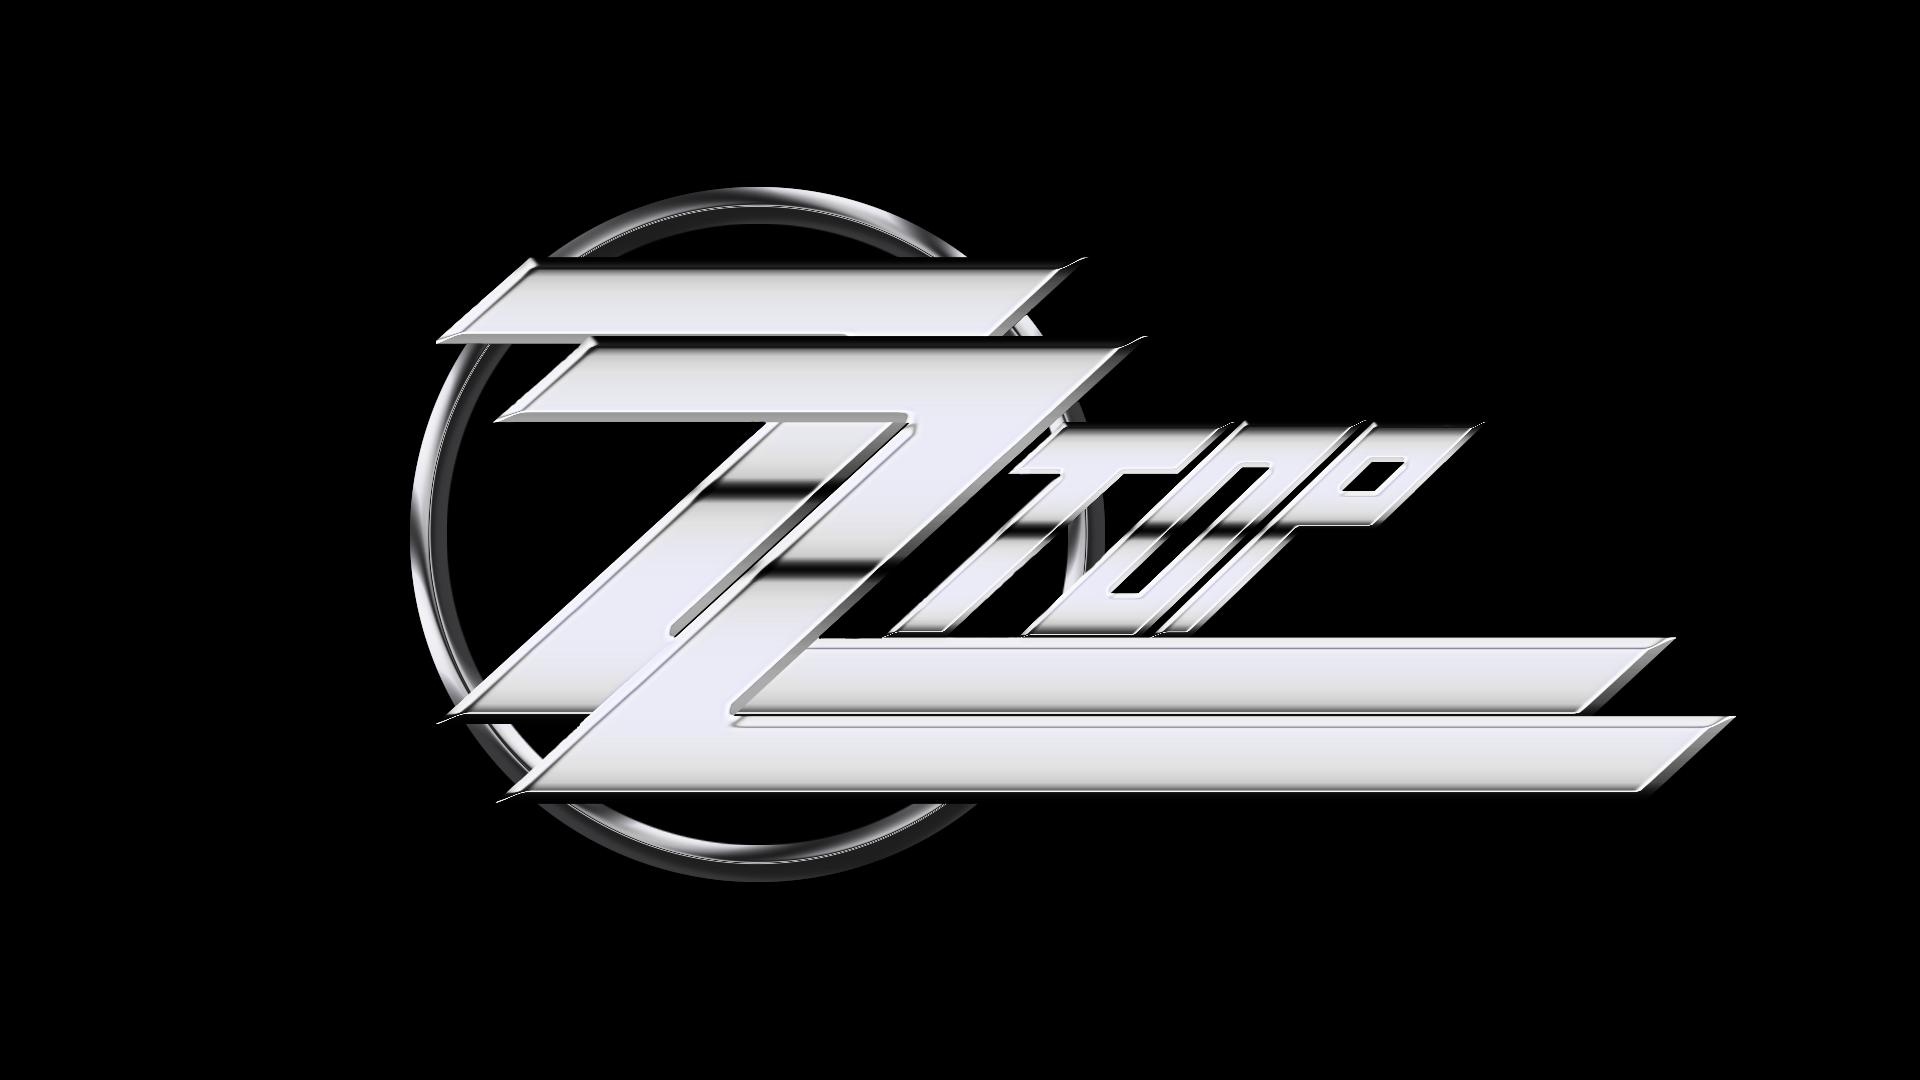 Zz Top Hard Rock Logo Wallpaper Background